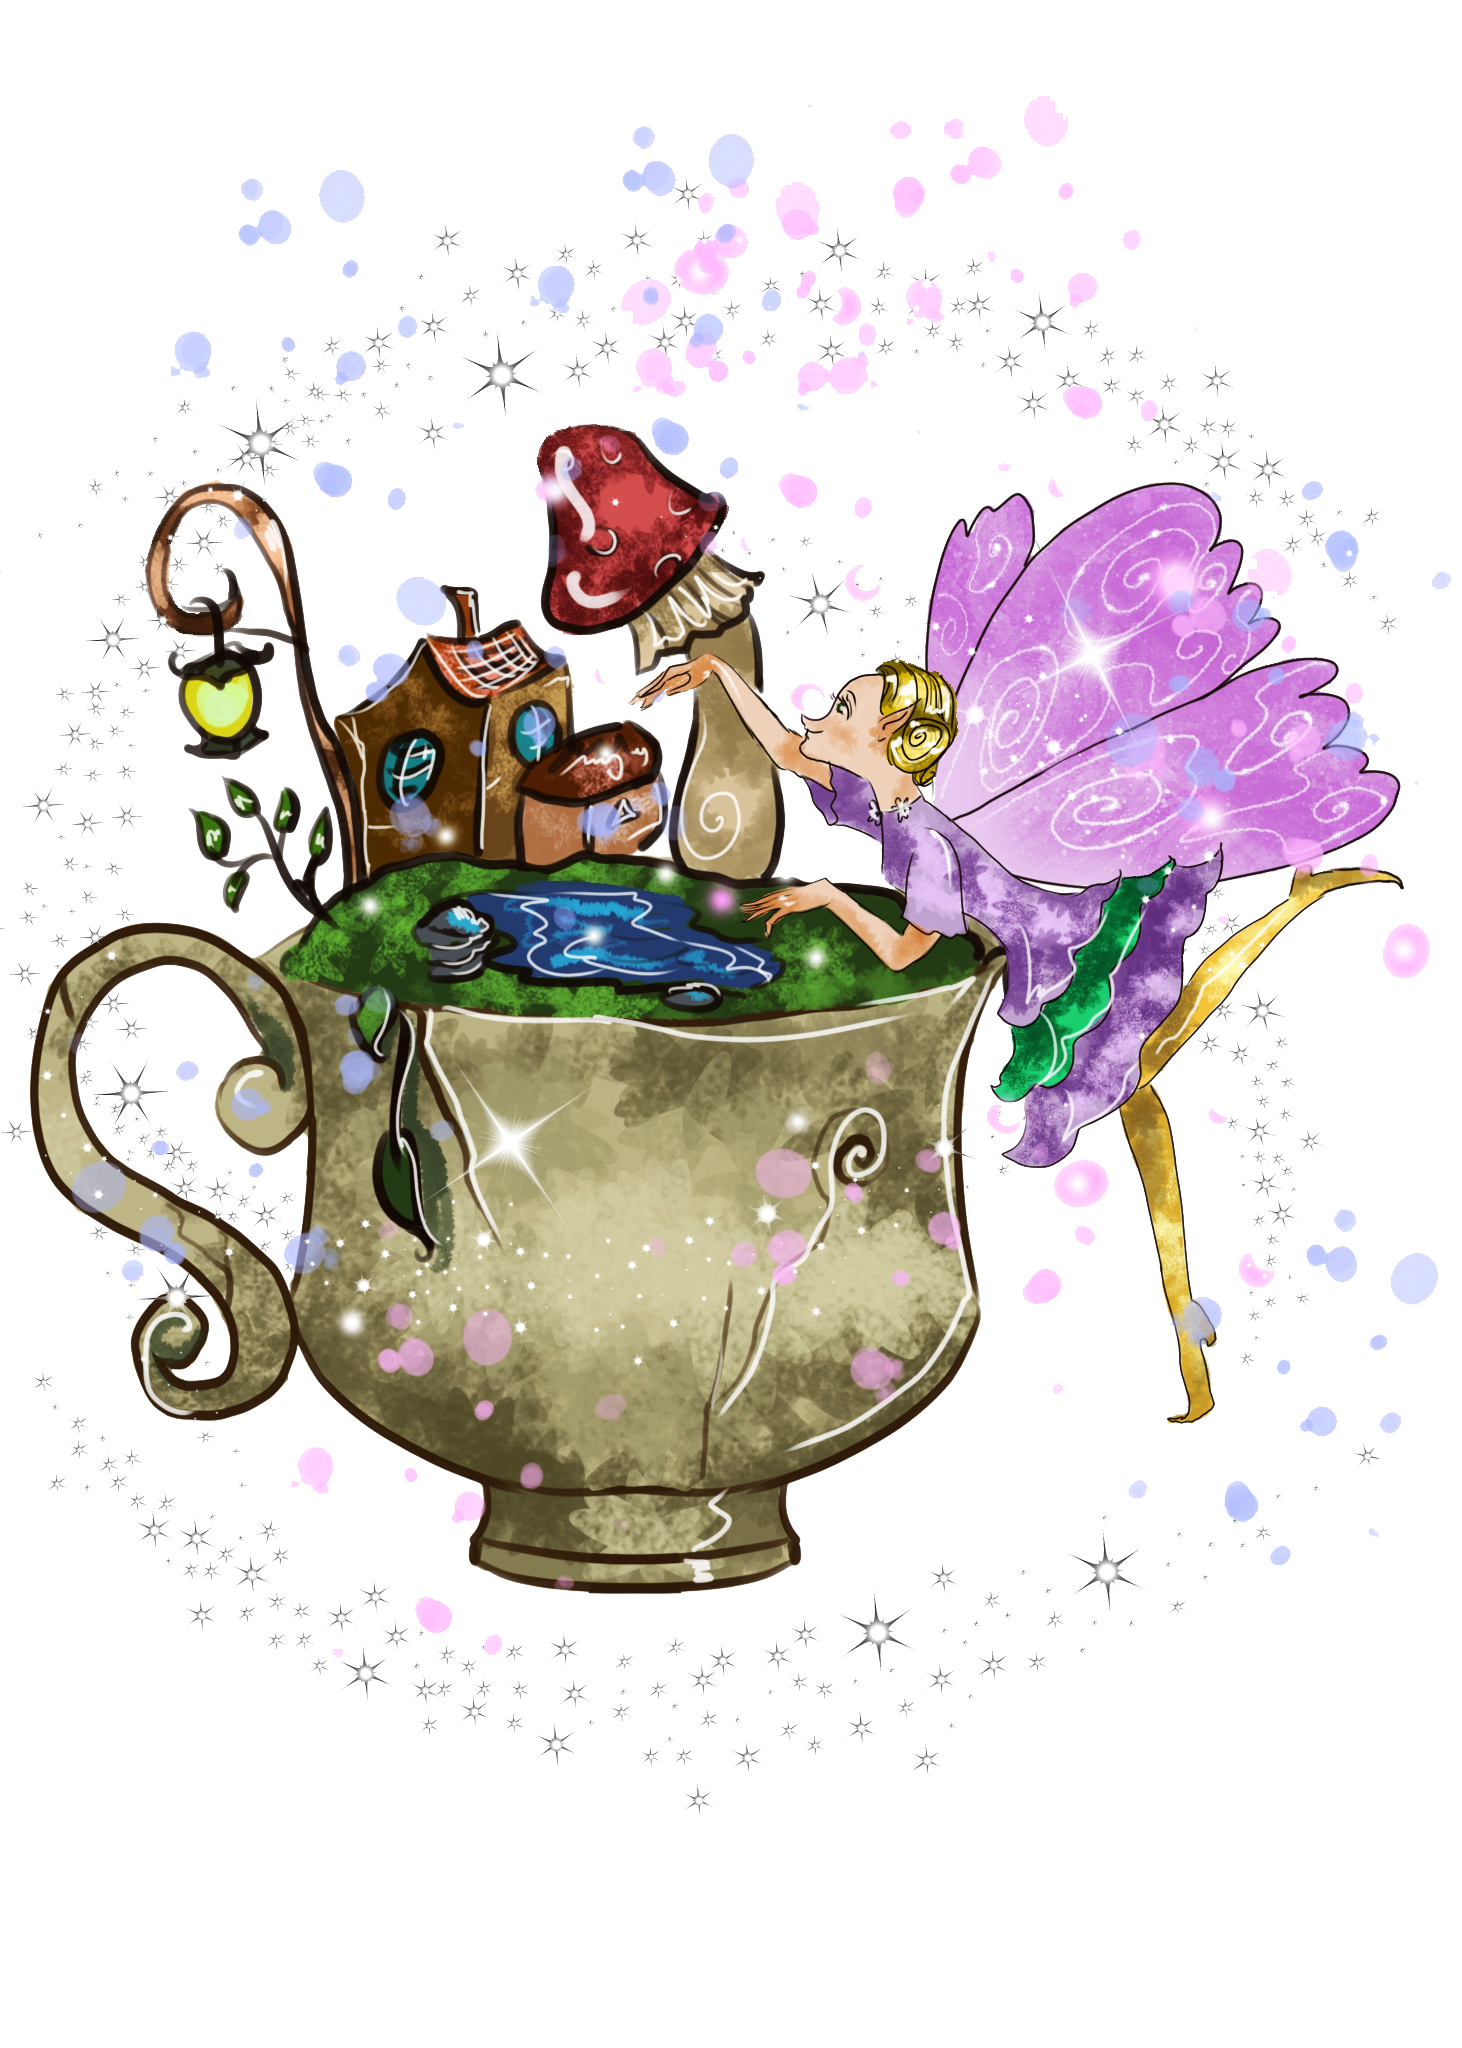 fairies clipart watercolor